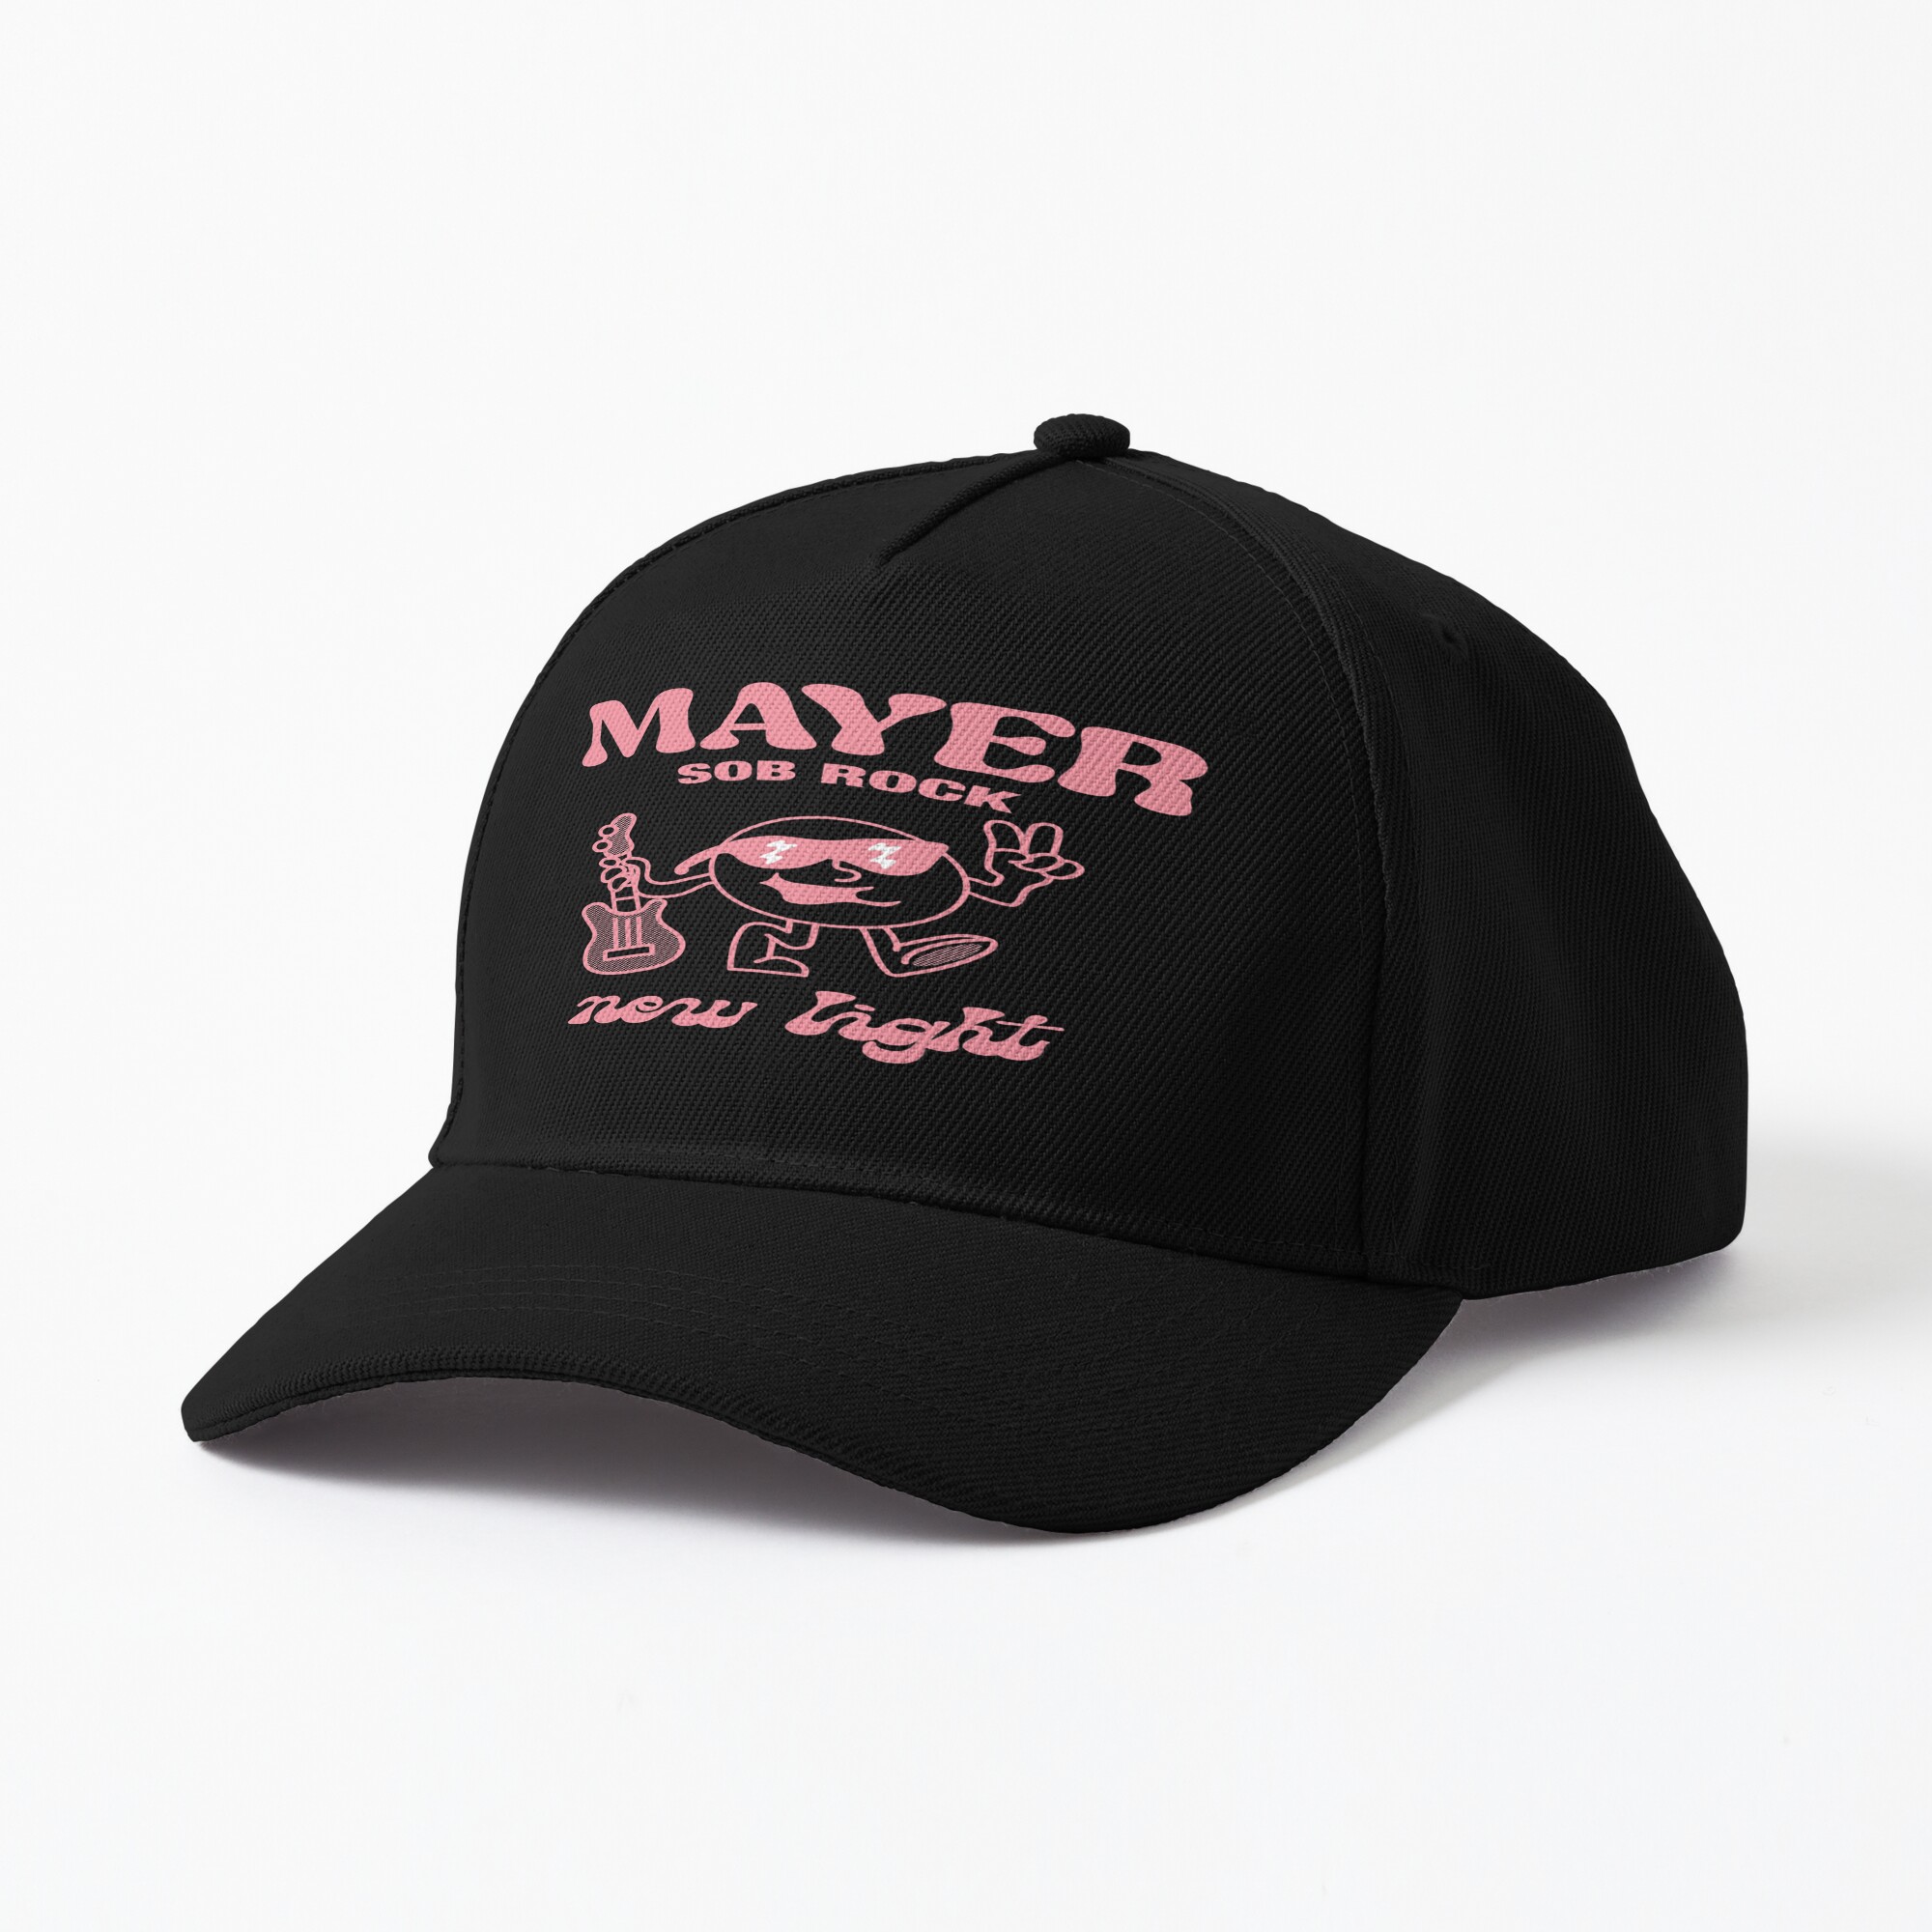 John Mayer cap - Jesus Is King Shop